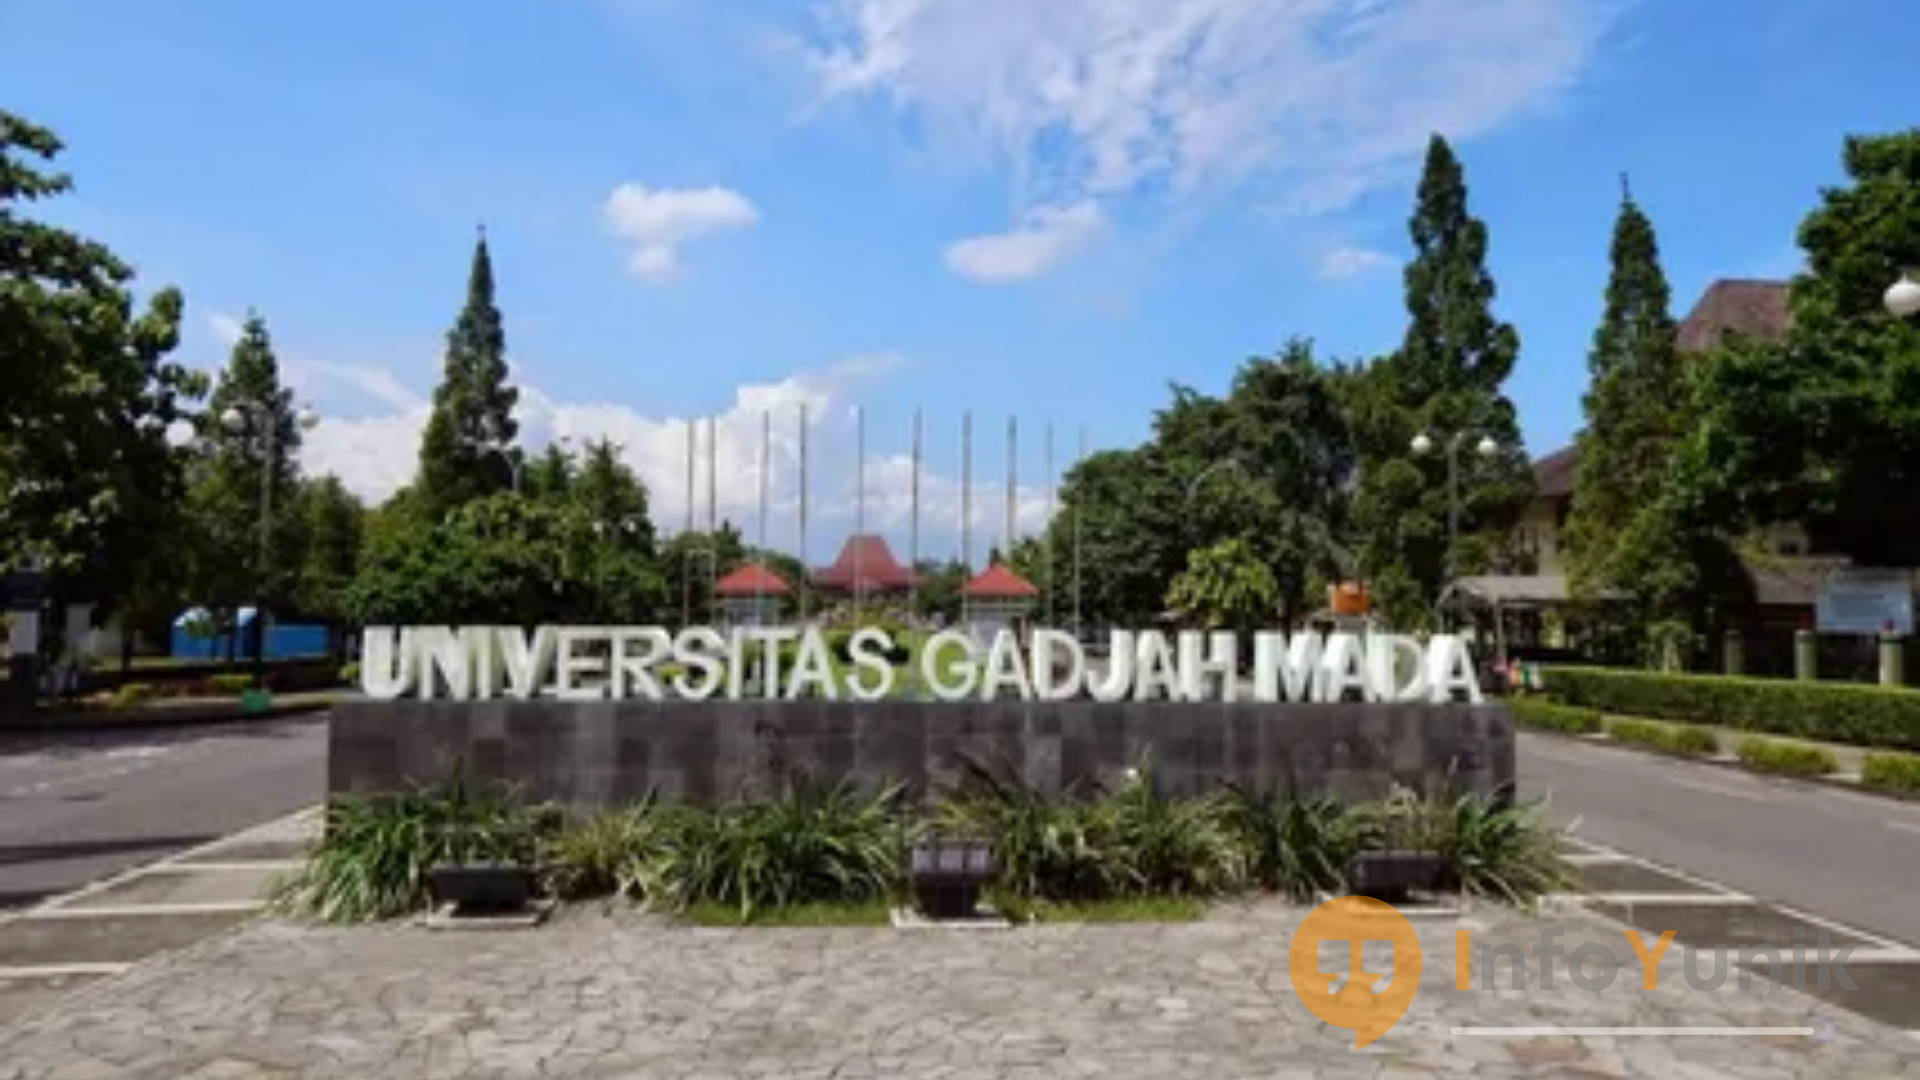 Universitas Gadjah Mada